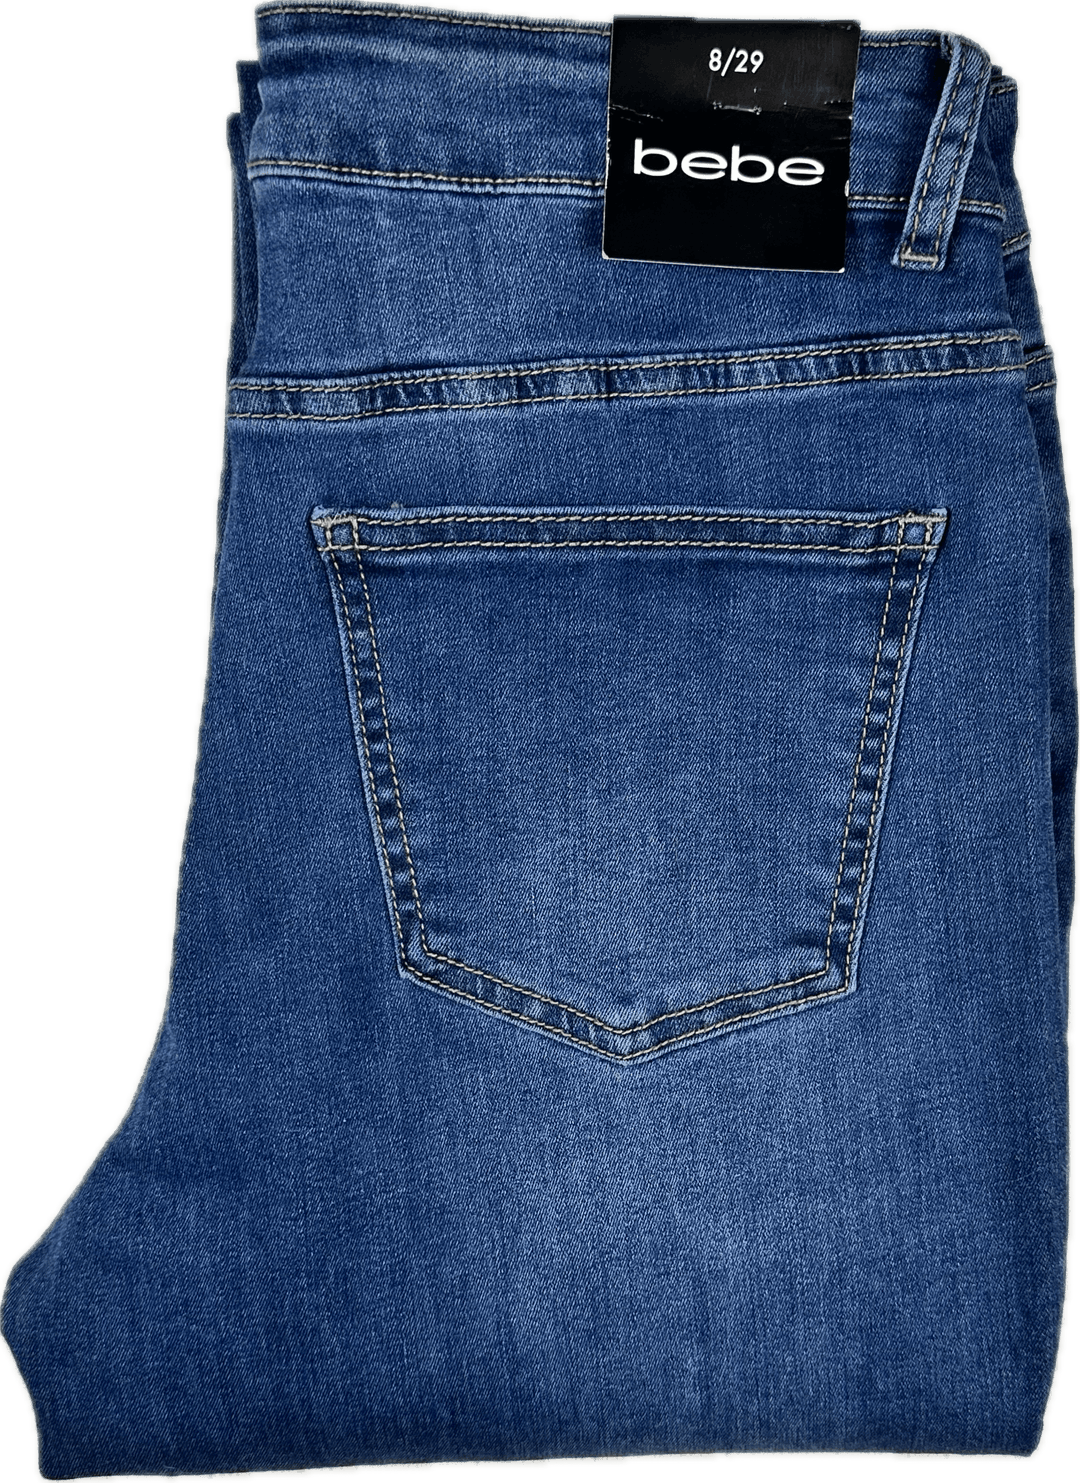 NWT- Bebe Womens Slim Straight Crystal Trim Jeans -Size 29 - Jean Pool